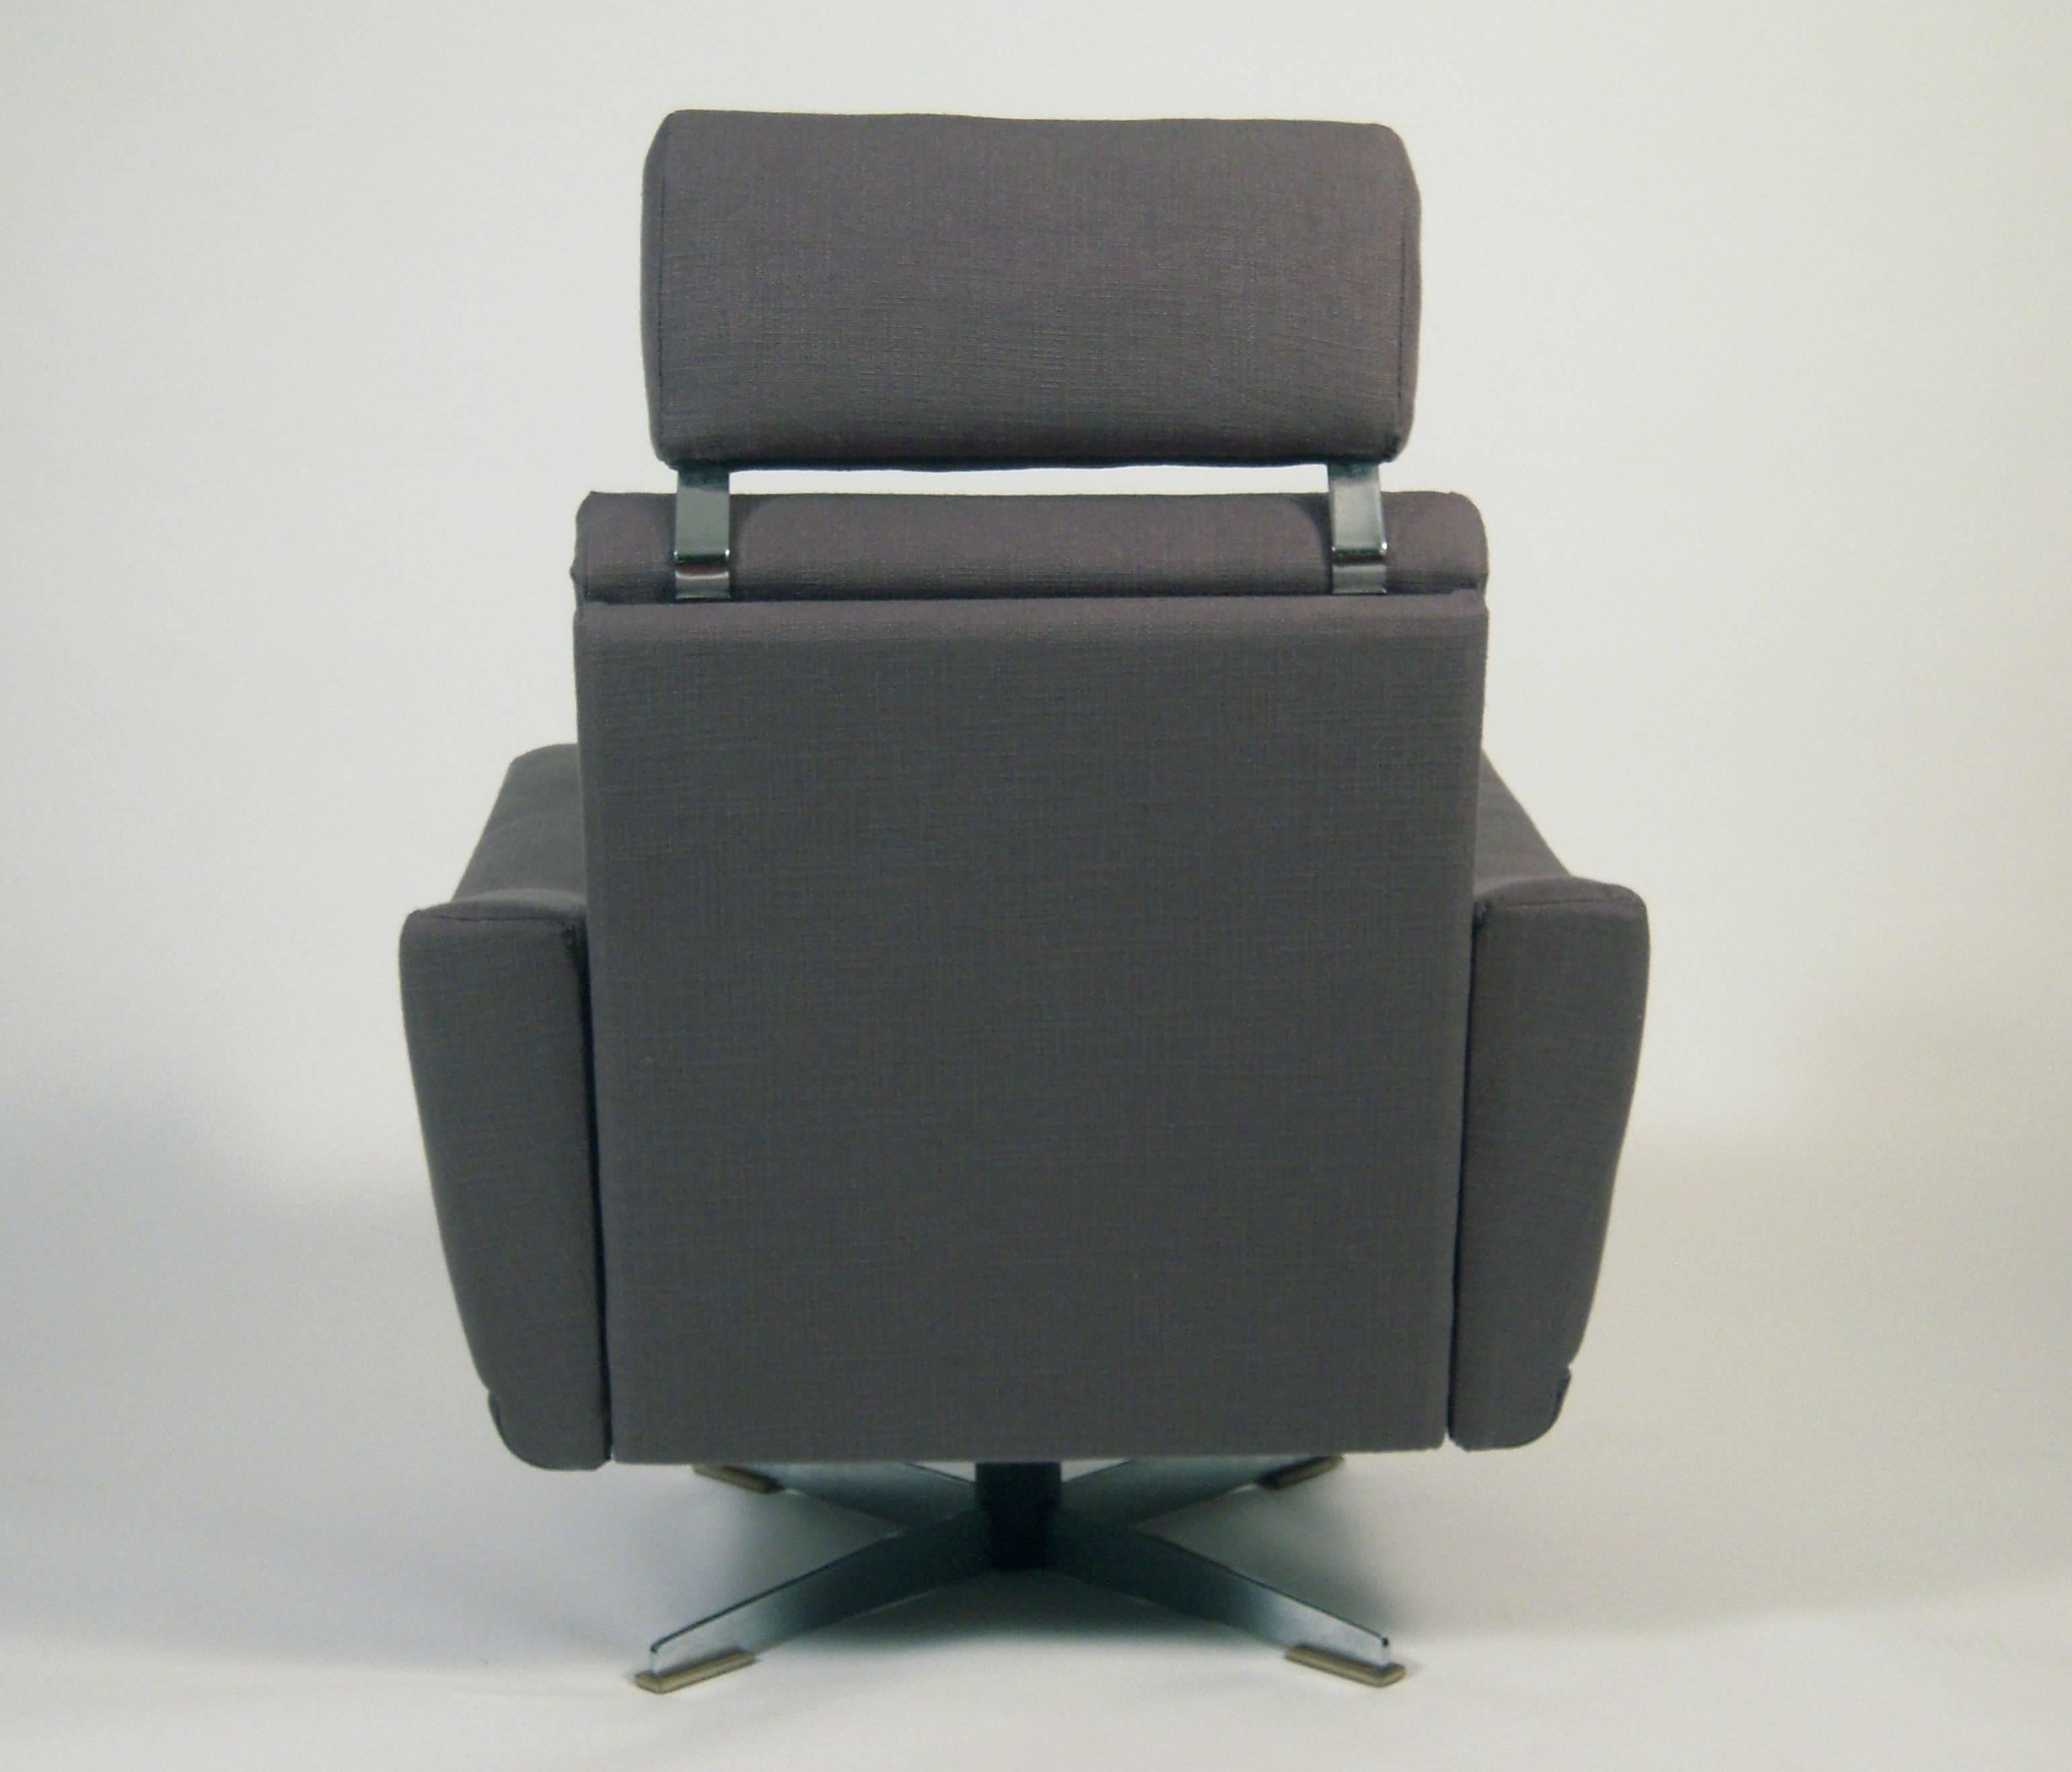 20th Century Pair of Unusual and Versatile German Mid-Century Modern Swivel Chairs